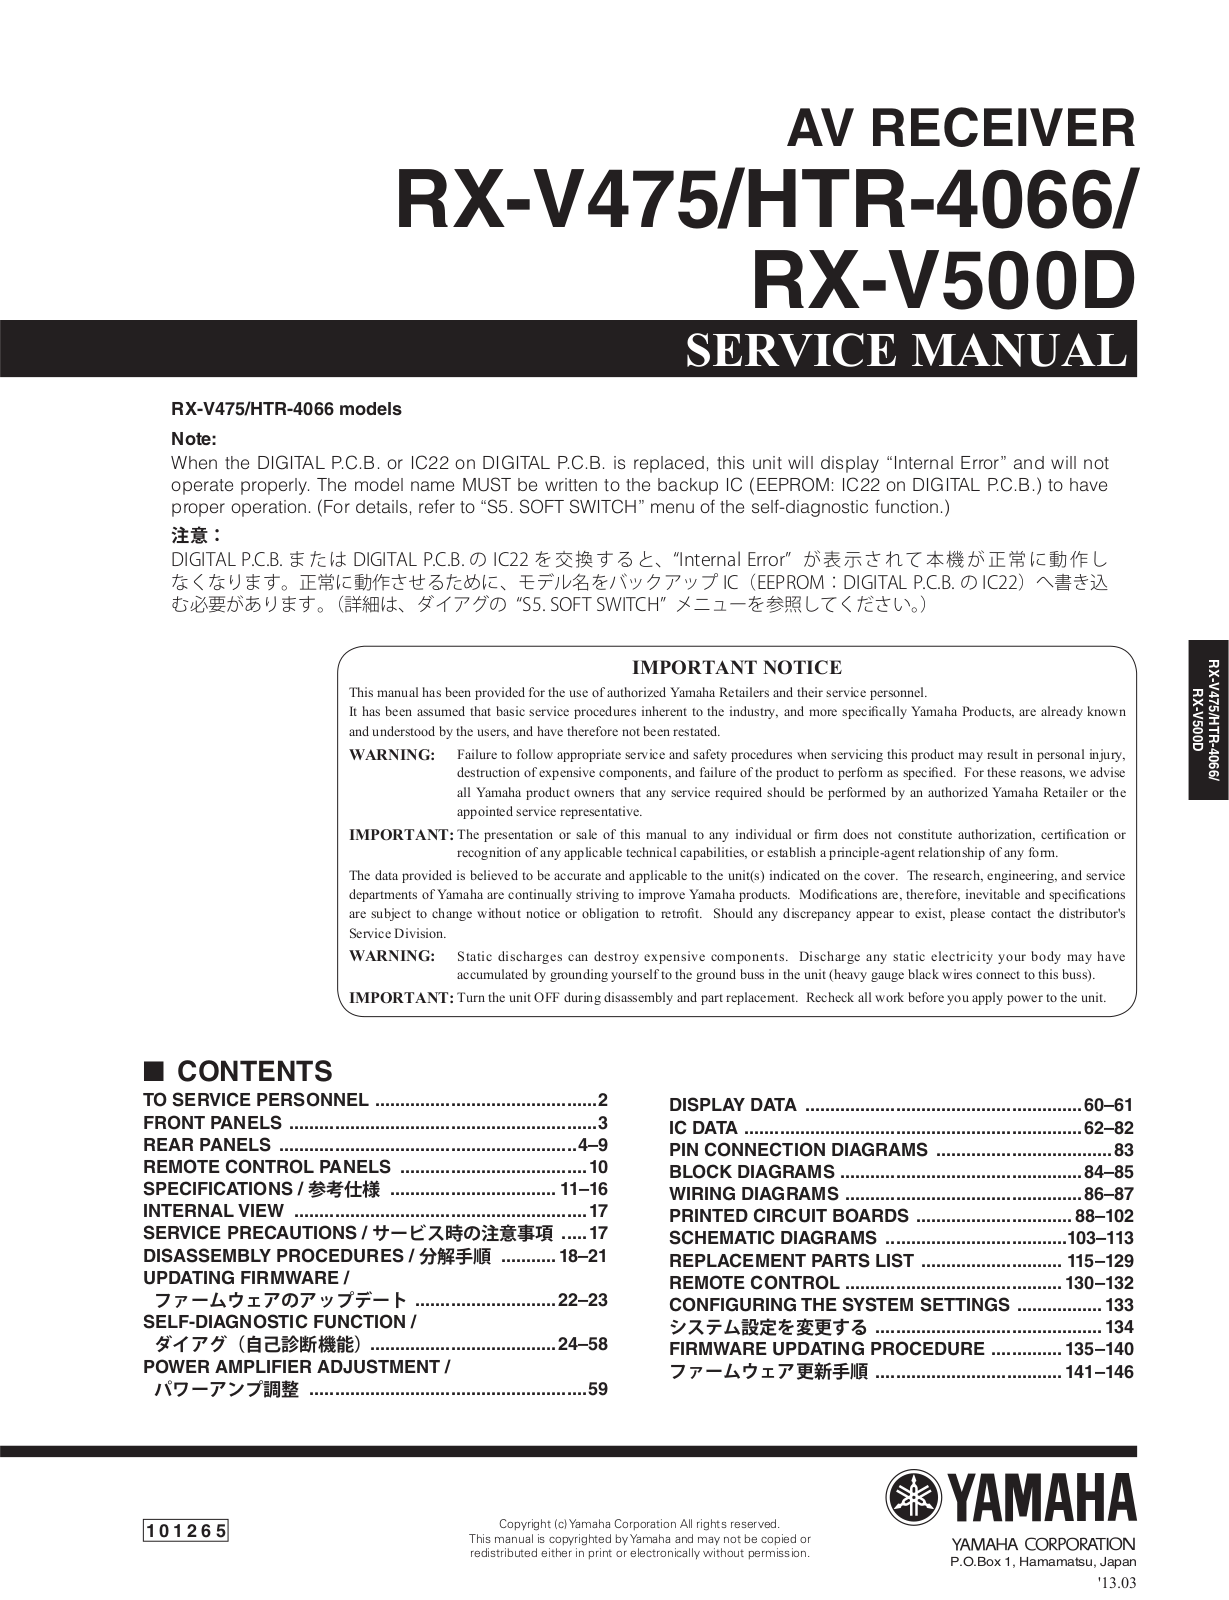 Yamaha RXV-500-D, RXV-475, HTR-4066 Service Manual